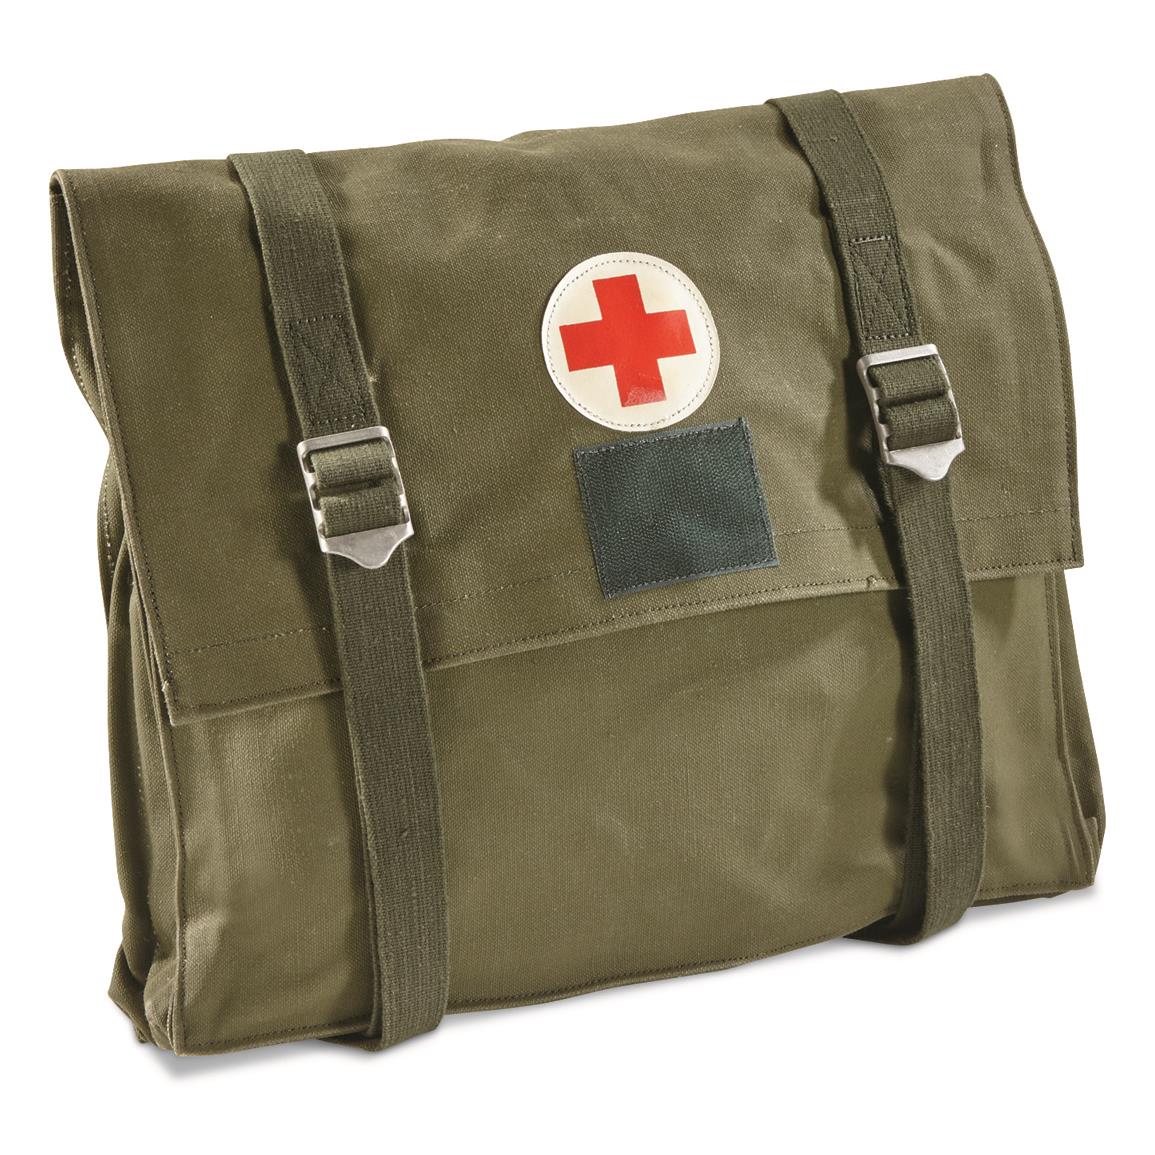 Swedish Military Surplus First Aid Shoulder Bag, Used